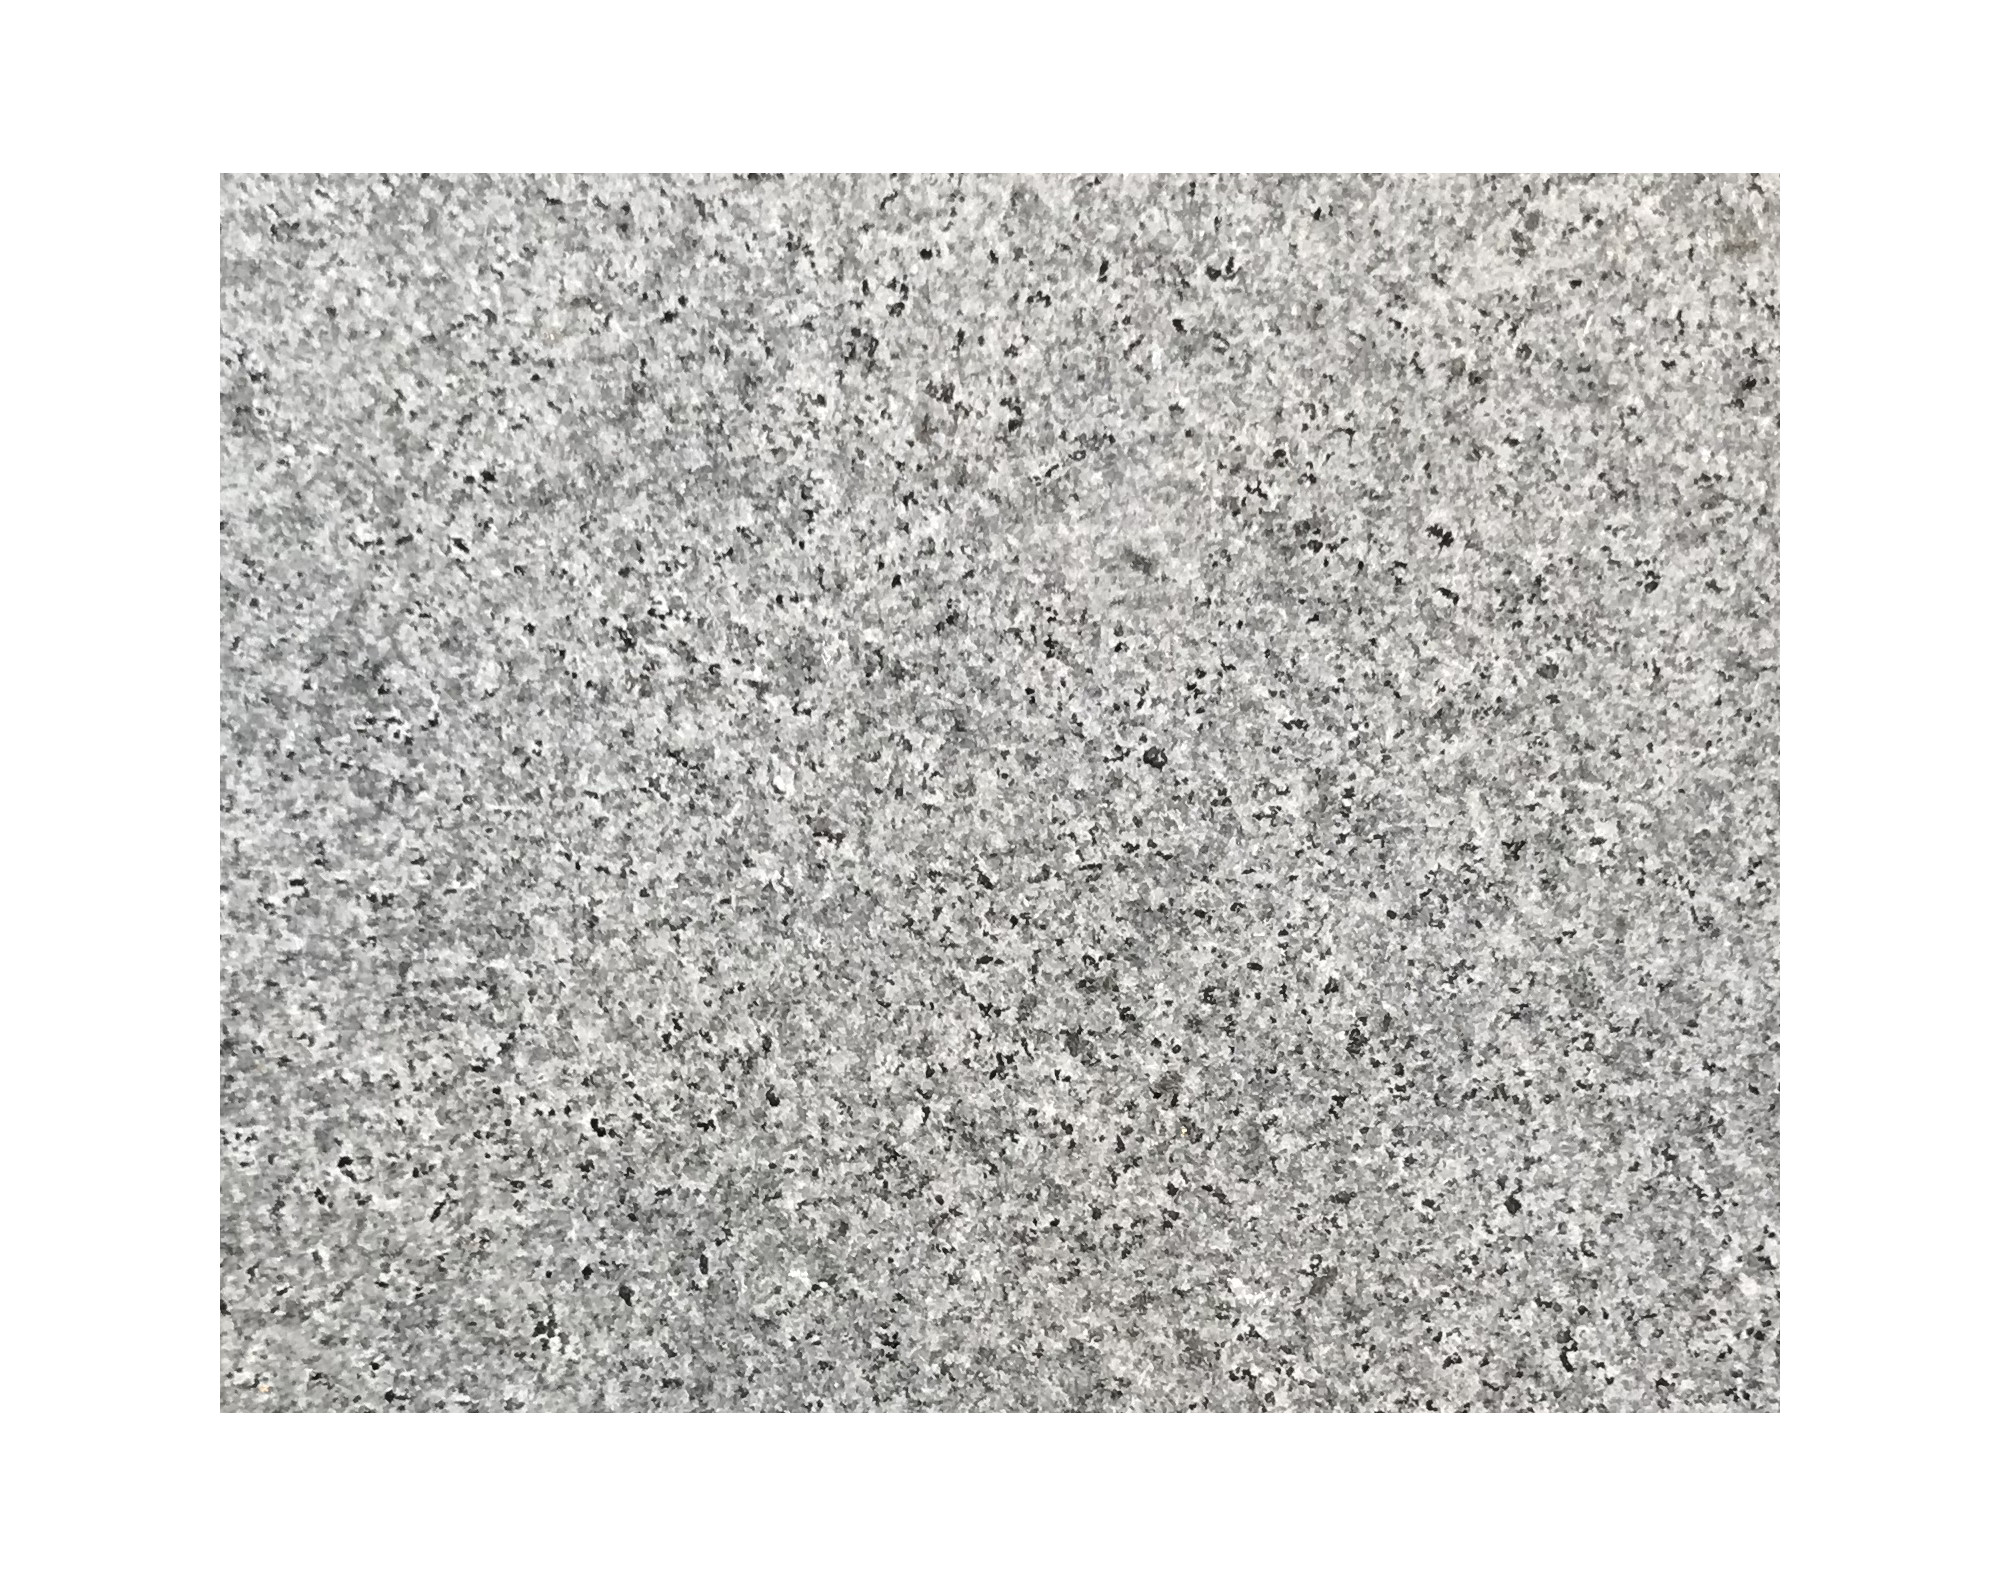 Harmo roc napoliset, natura-serie, ovaal d: 6,00mx12,60m, berggrijs, graniet